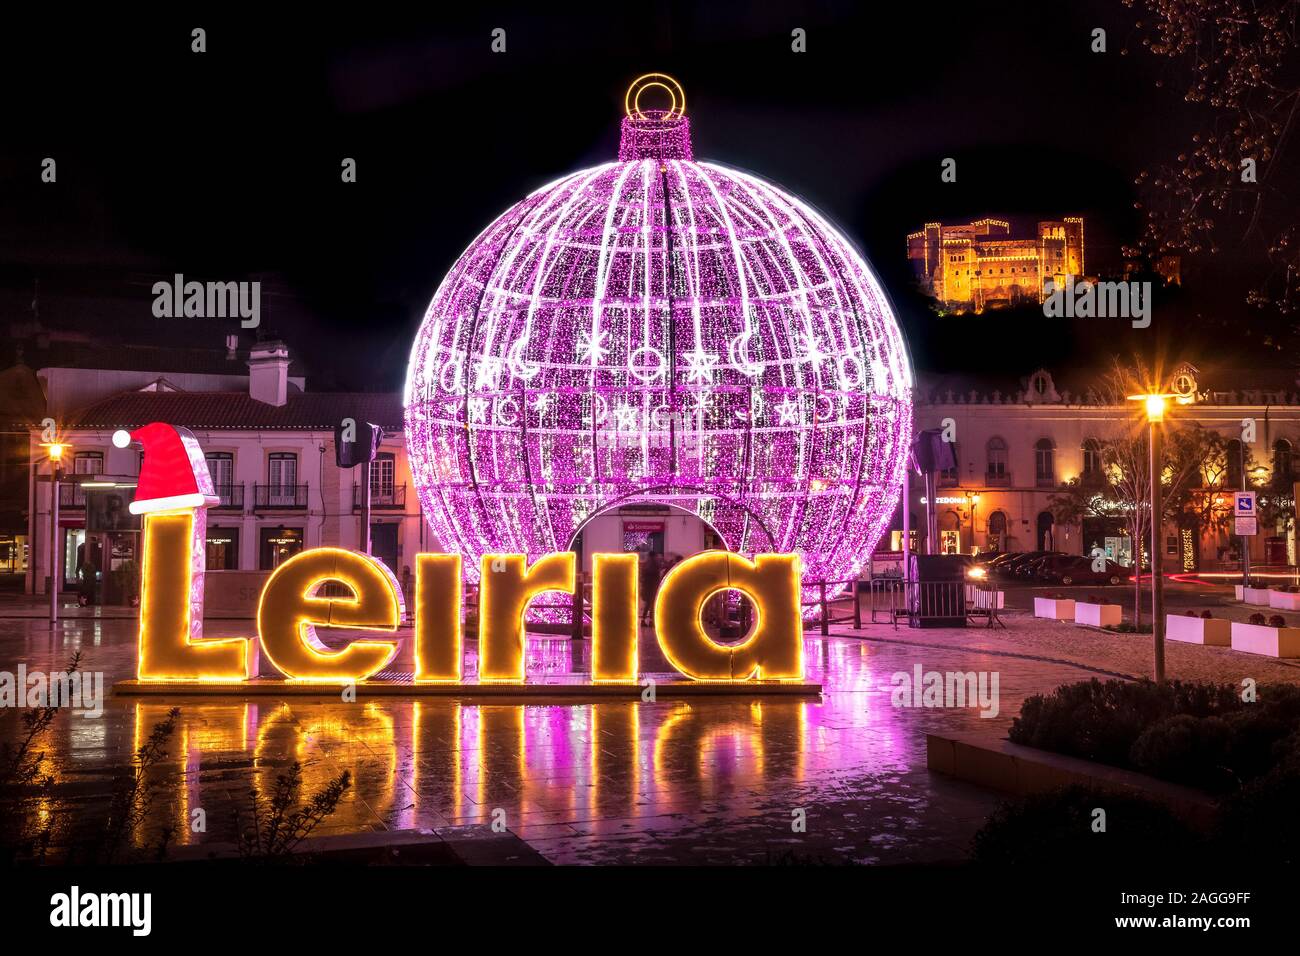 Leiria, Portugal - Dezember 14, 2019: Weihnachtsdekoration in Leiria, Portugal, mit dem Wort Leiria und einem riesigen Christmas Ball. Stockfoto